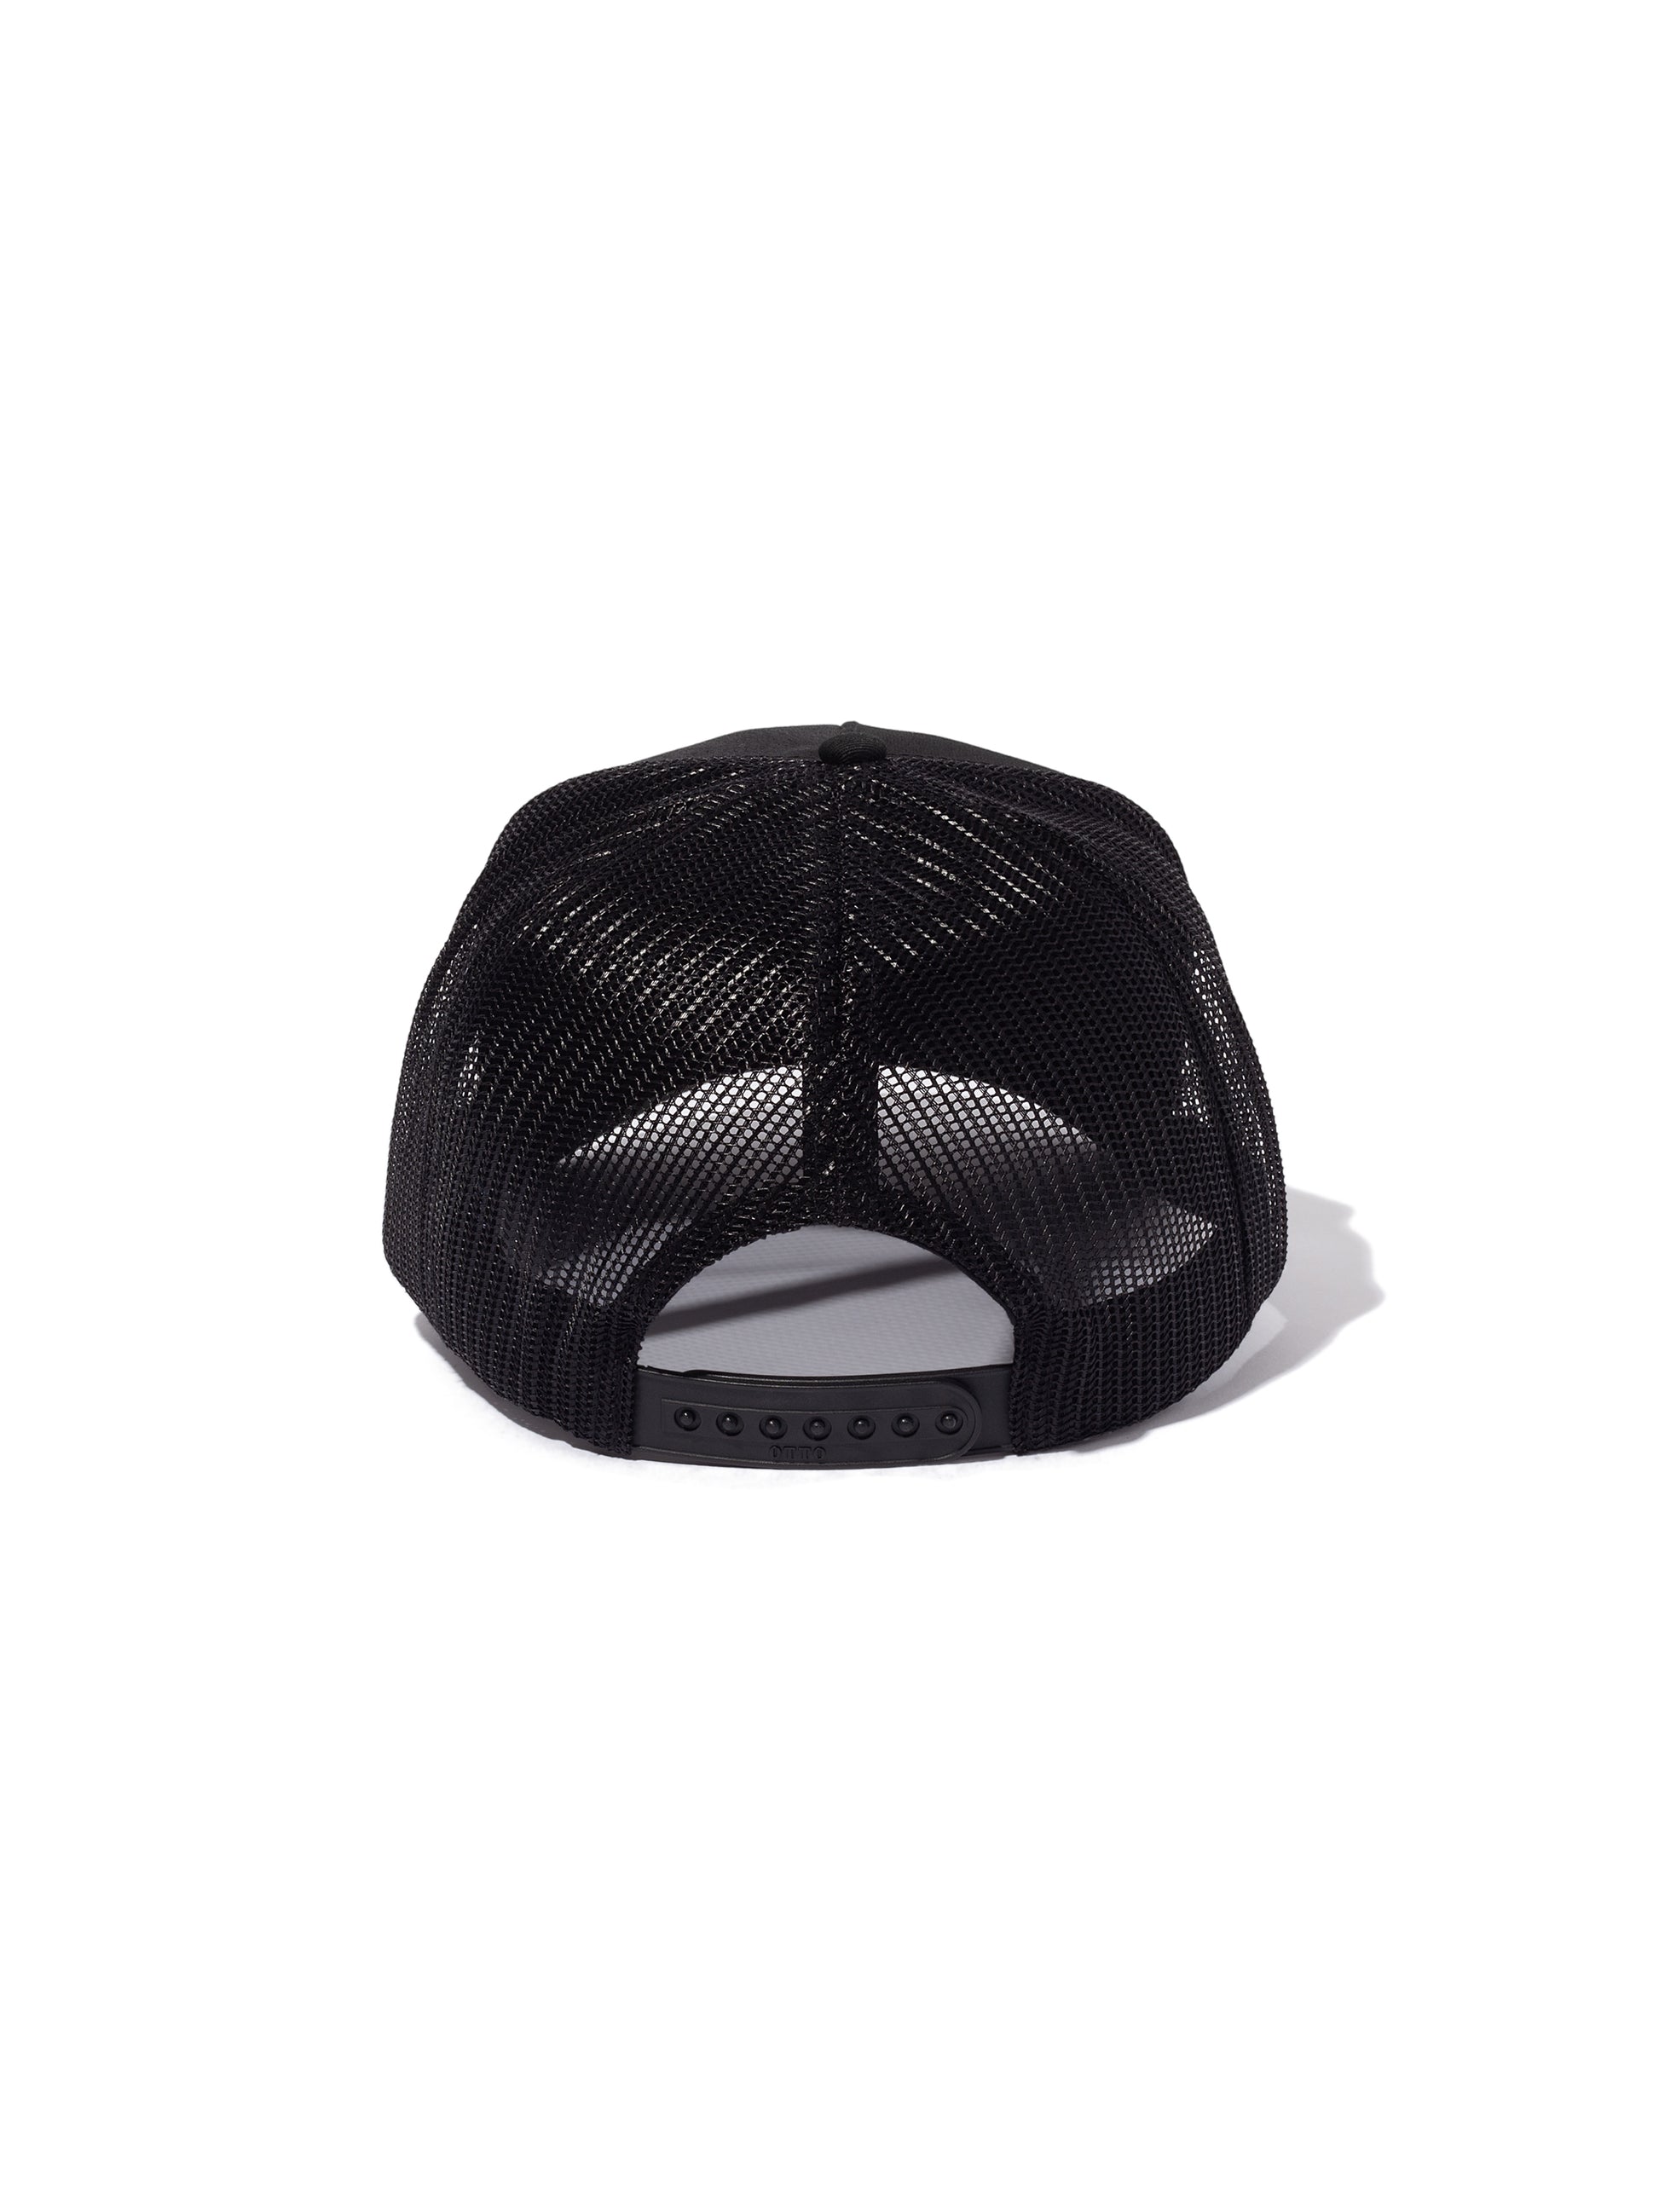 Nashville Trucker Hat | Black | Product Detail Image 2 | Uncommon Lifestyle